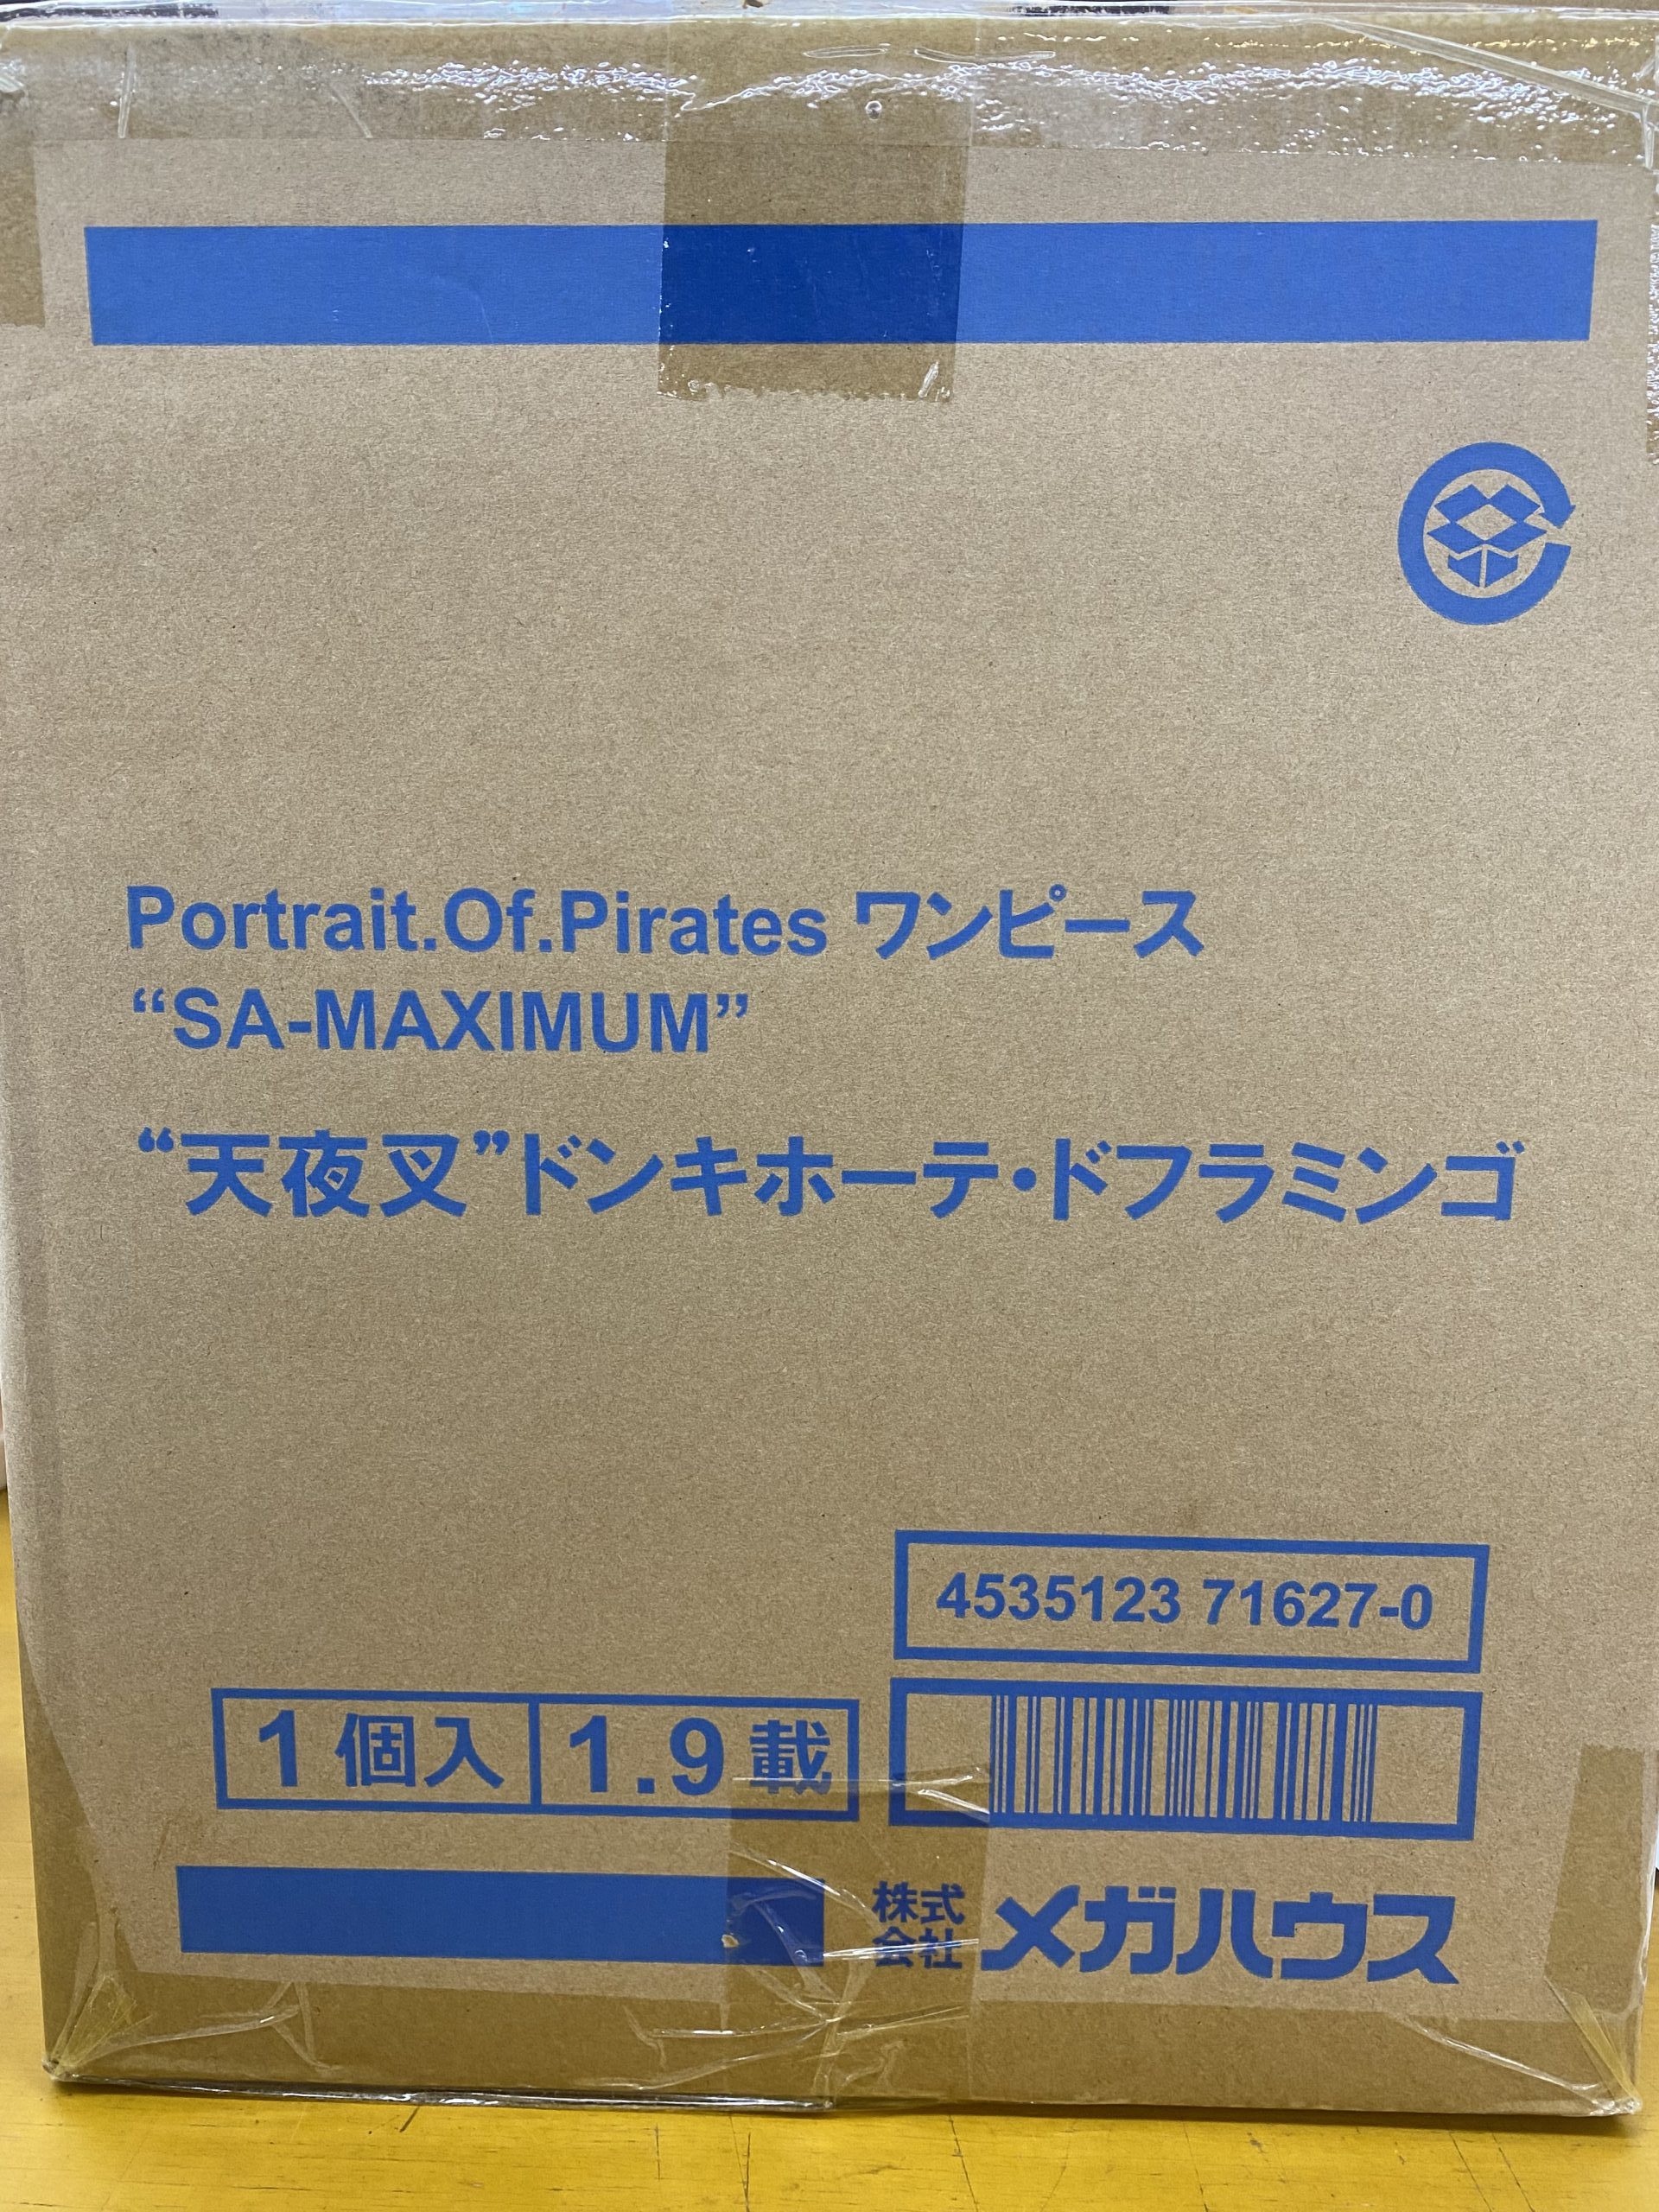 Portrait.Of.Piratesワンピース “SA-MAXIMUM” “天夜叉”ドンキホーテ